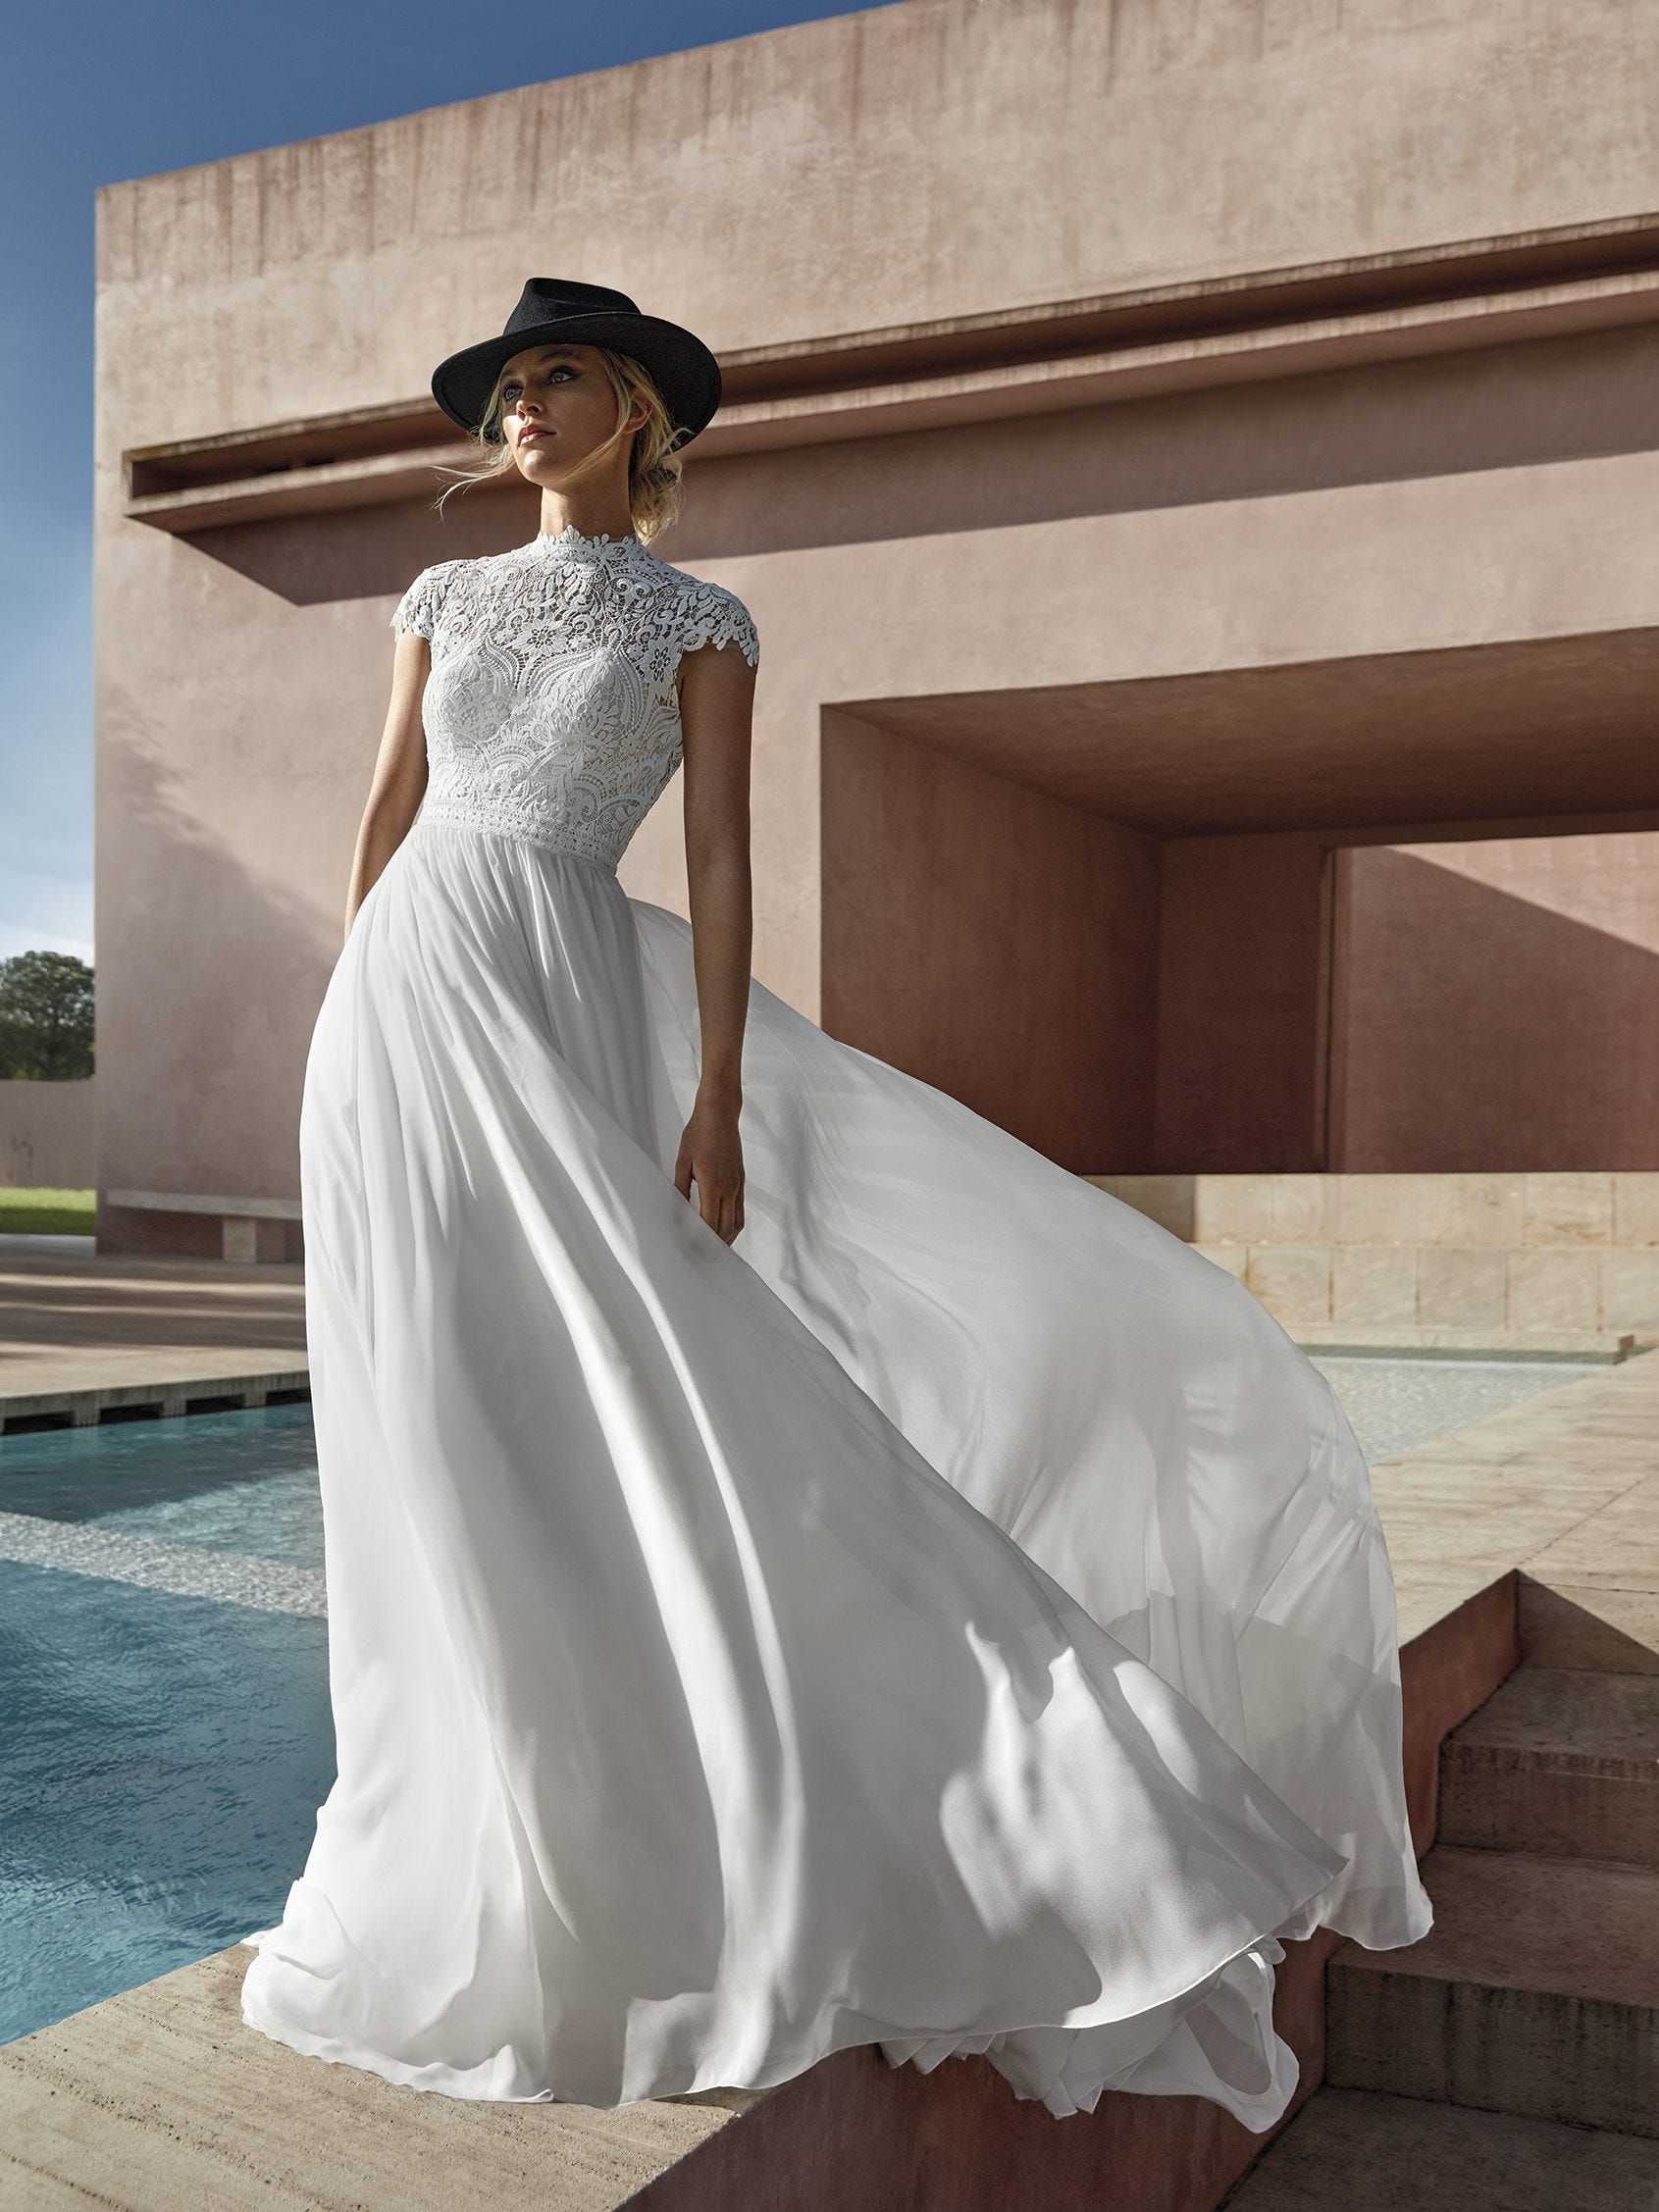 Modest Wedding Dresses: 25 Looks + FAQs